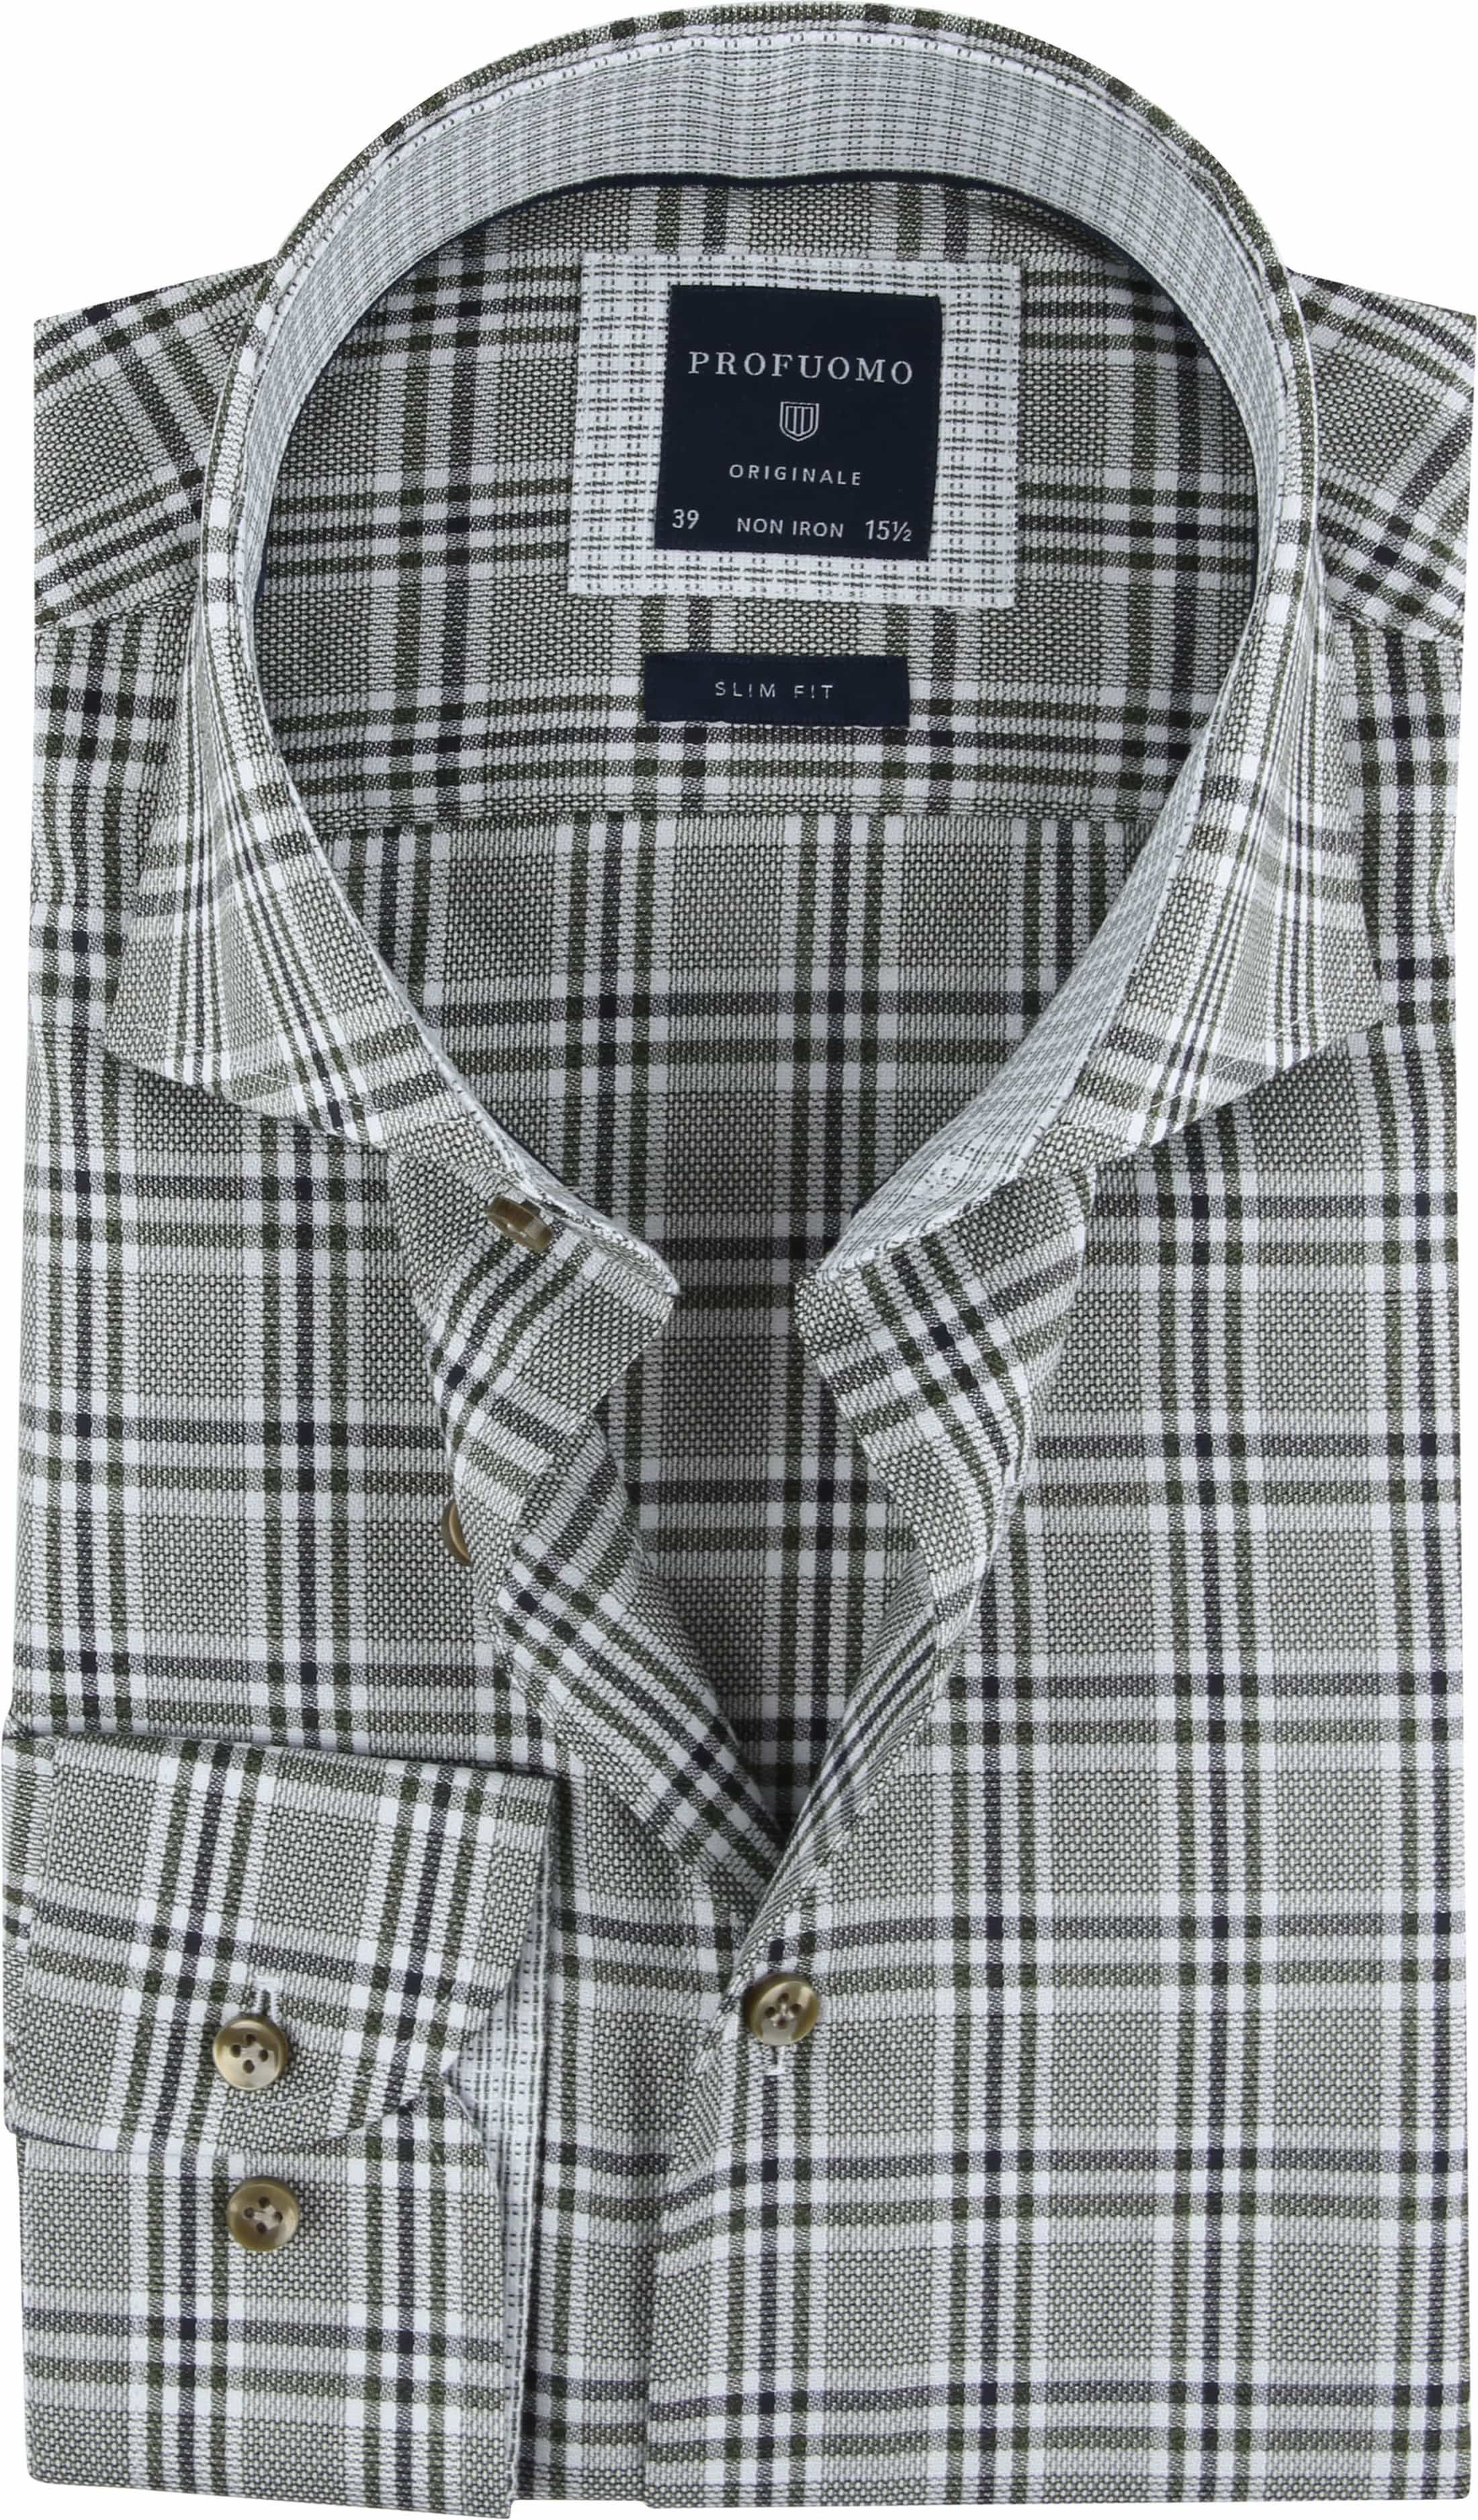 Profuomo Shirt Checkered Green Grey size 16